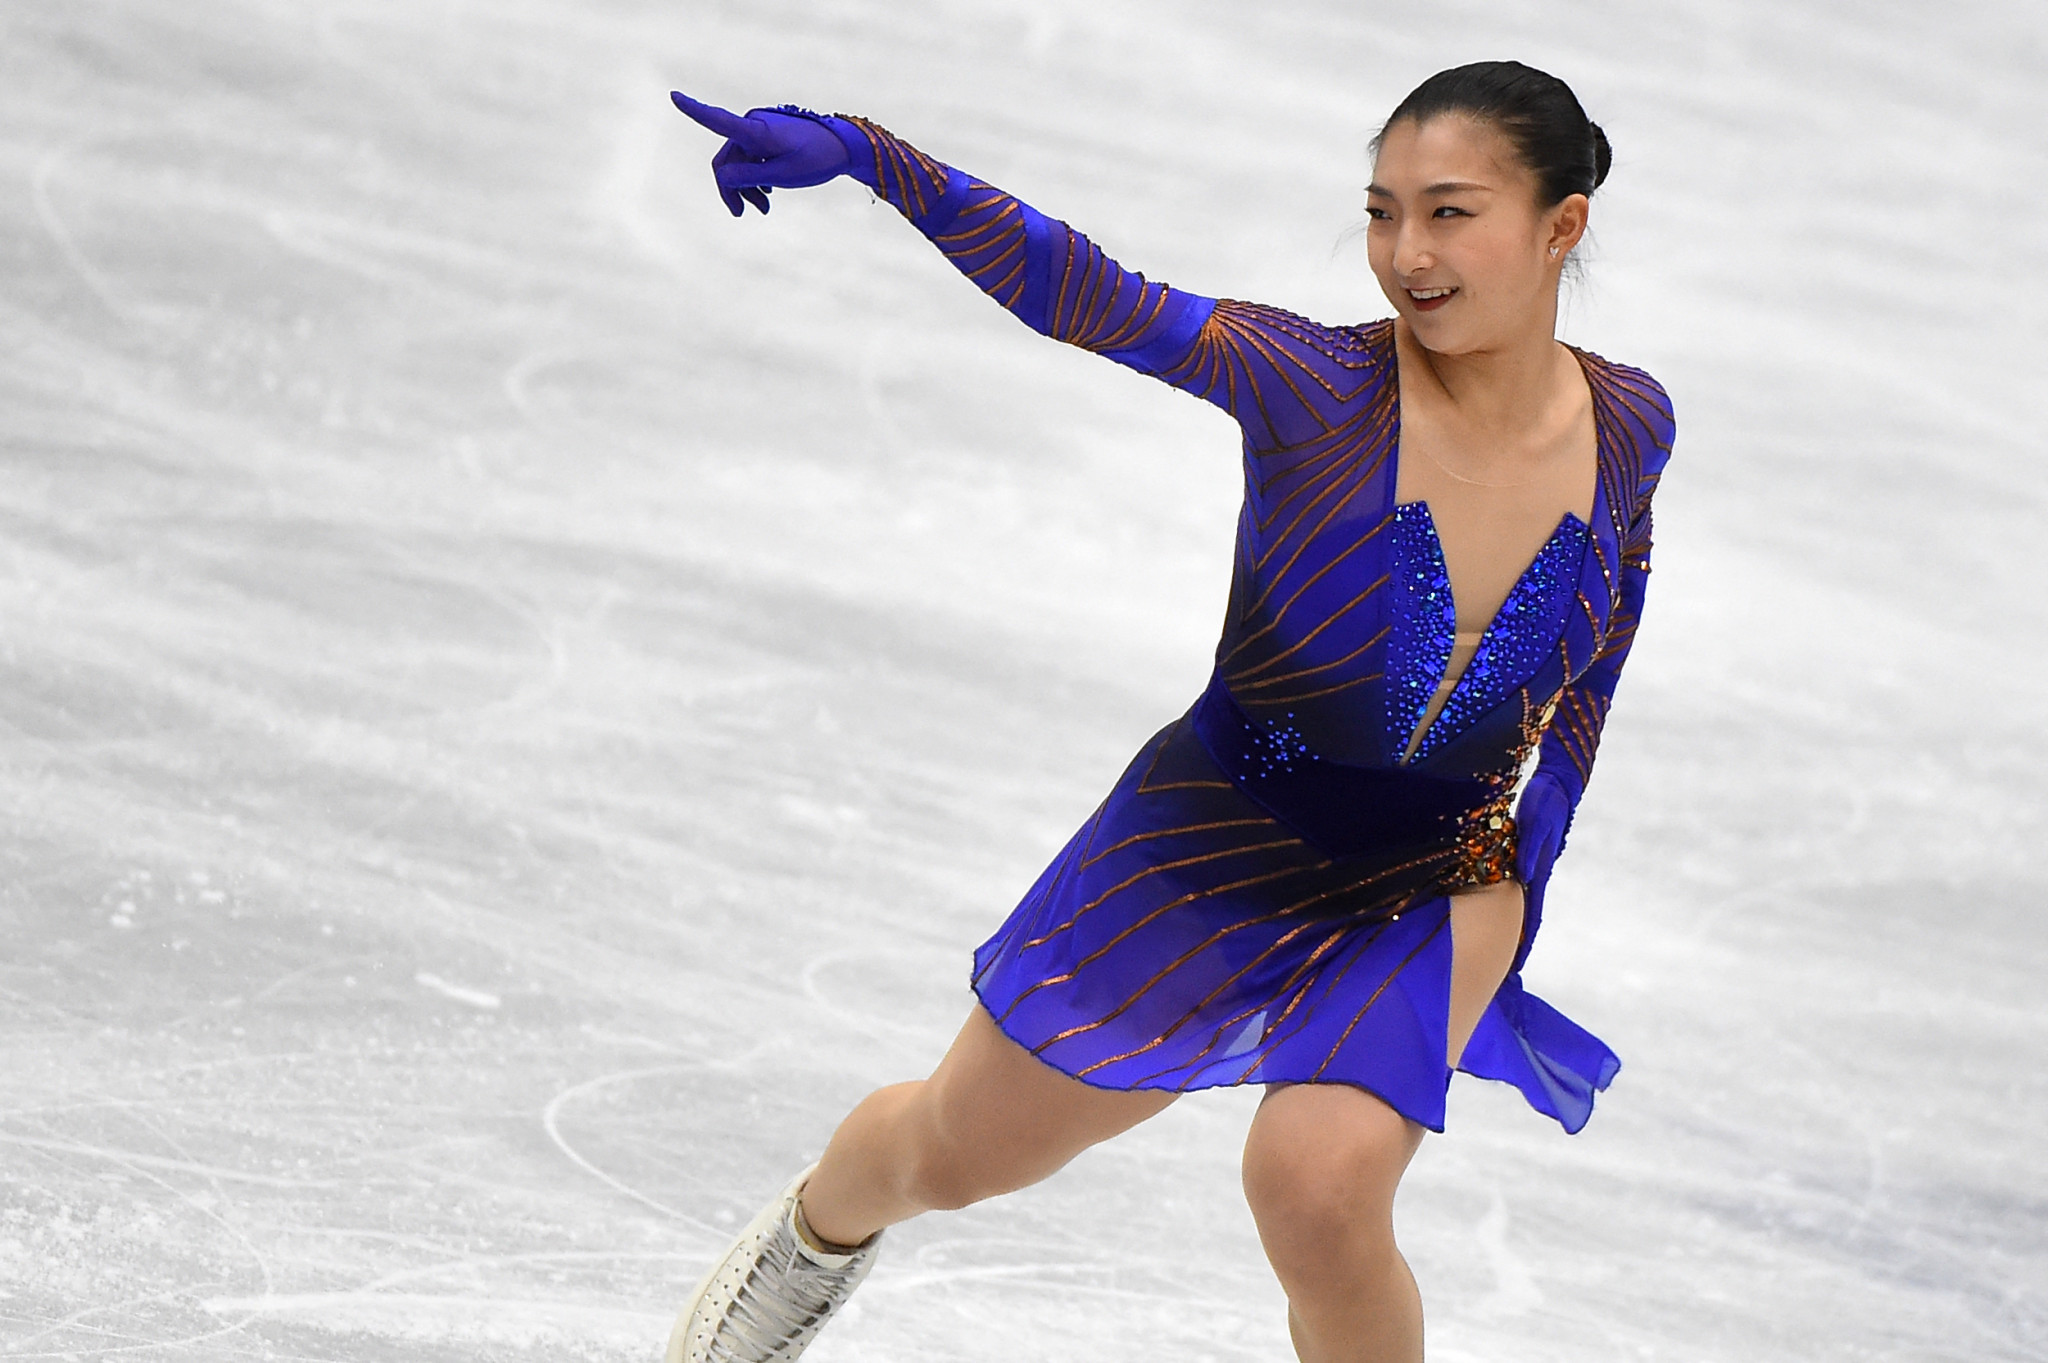 Sakamoto crowned women's singles champion at World Figure Skating Championships